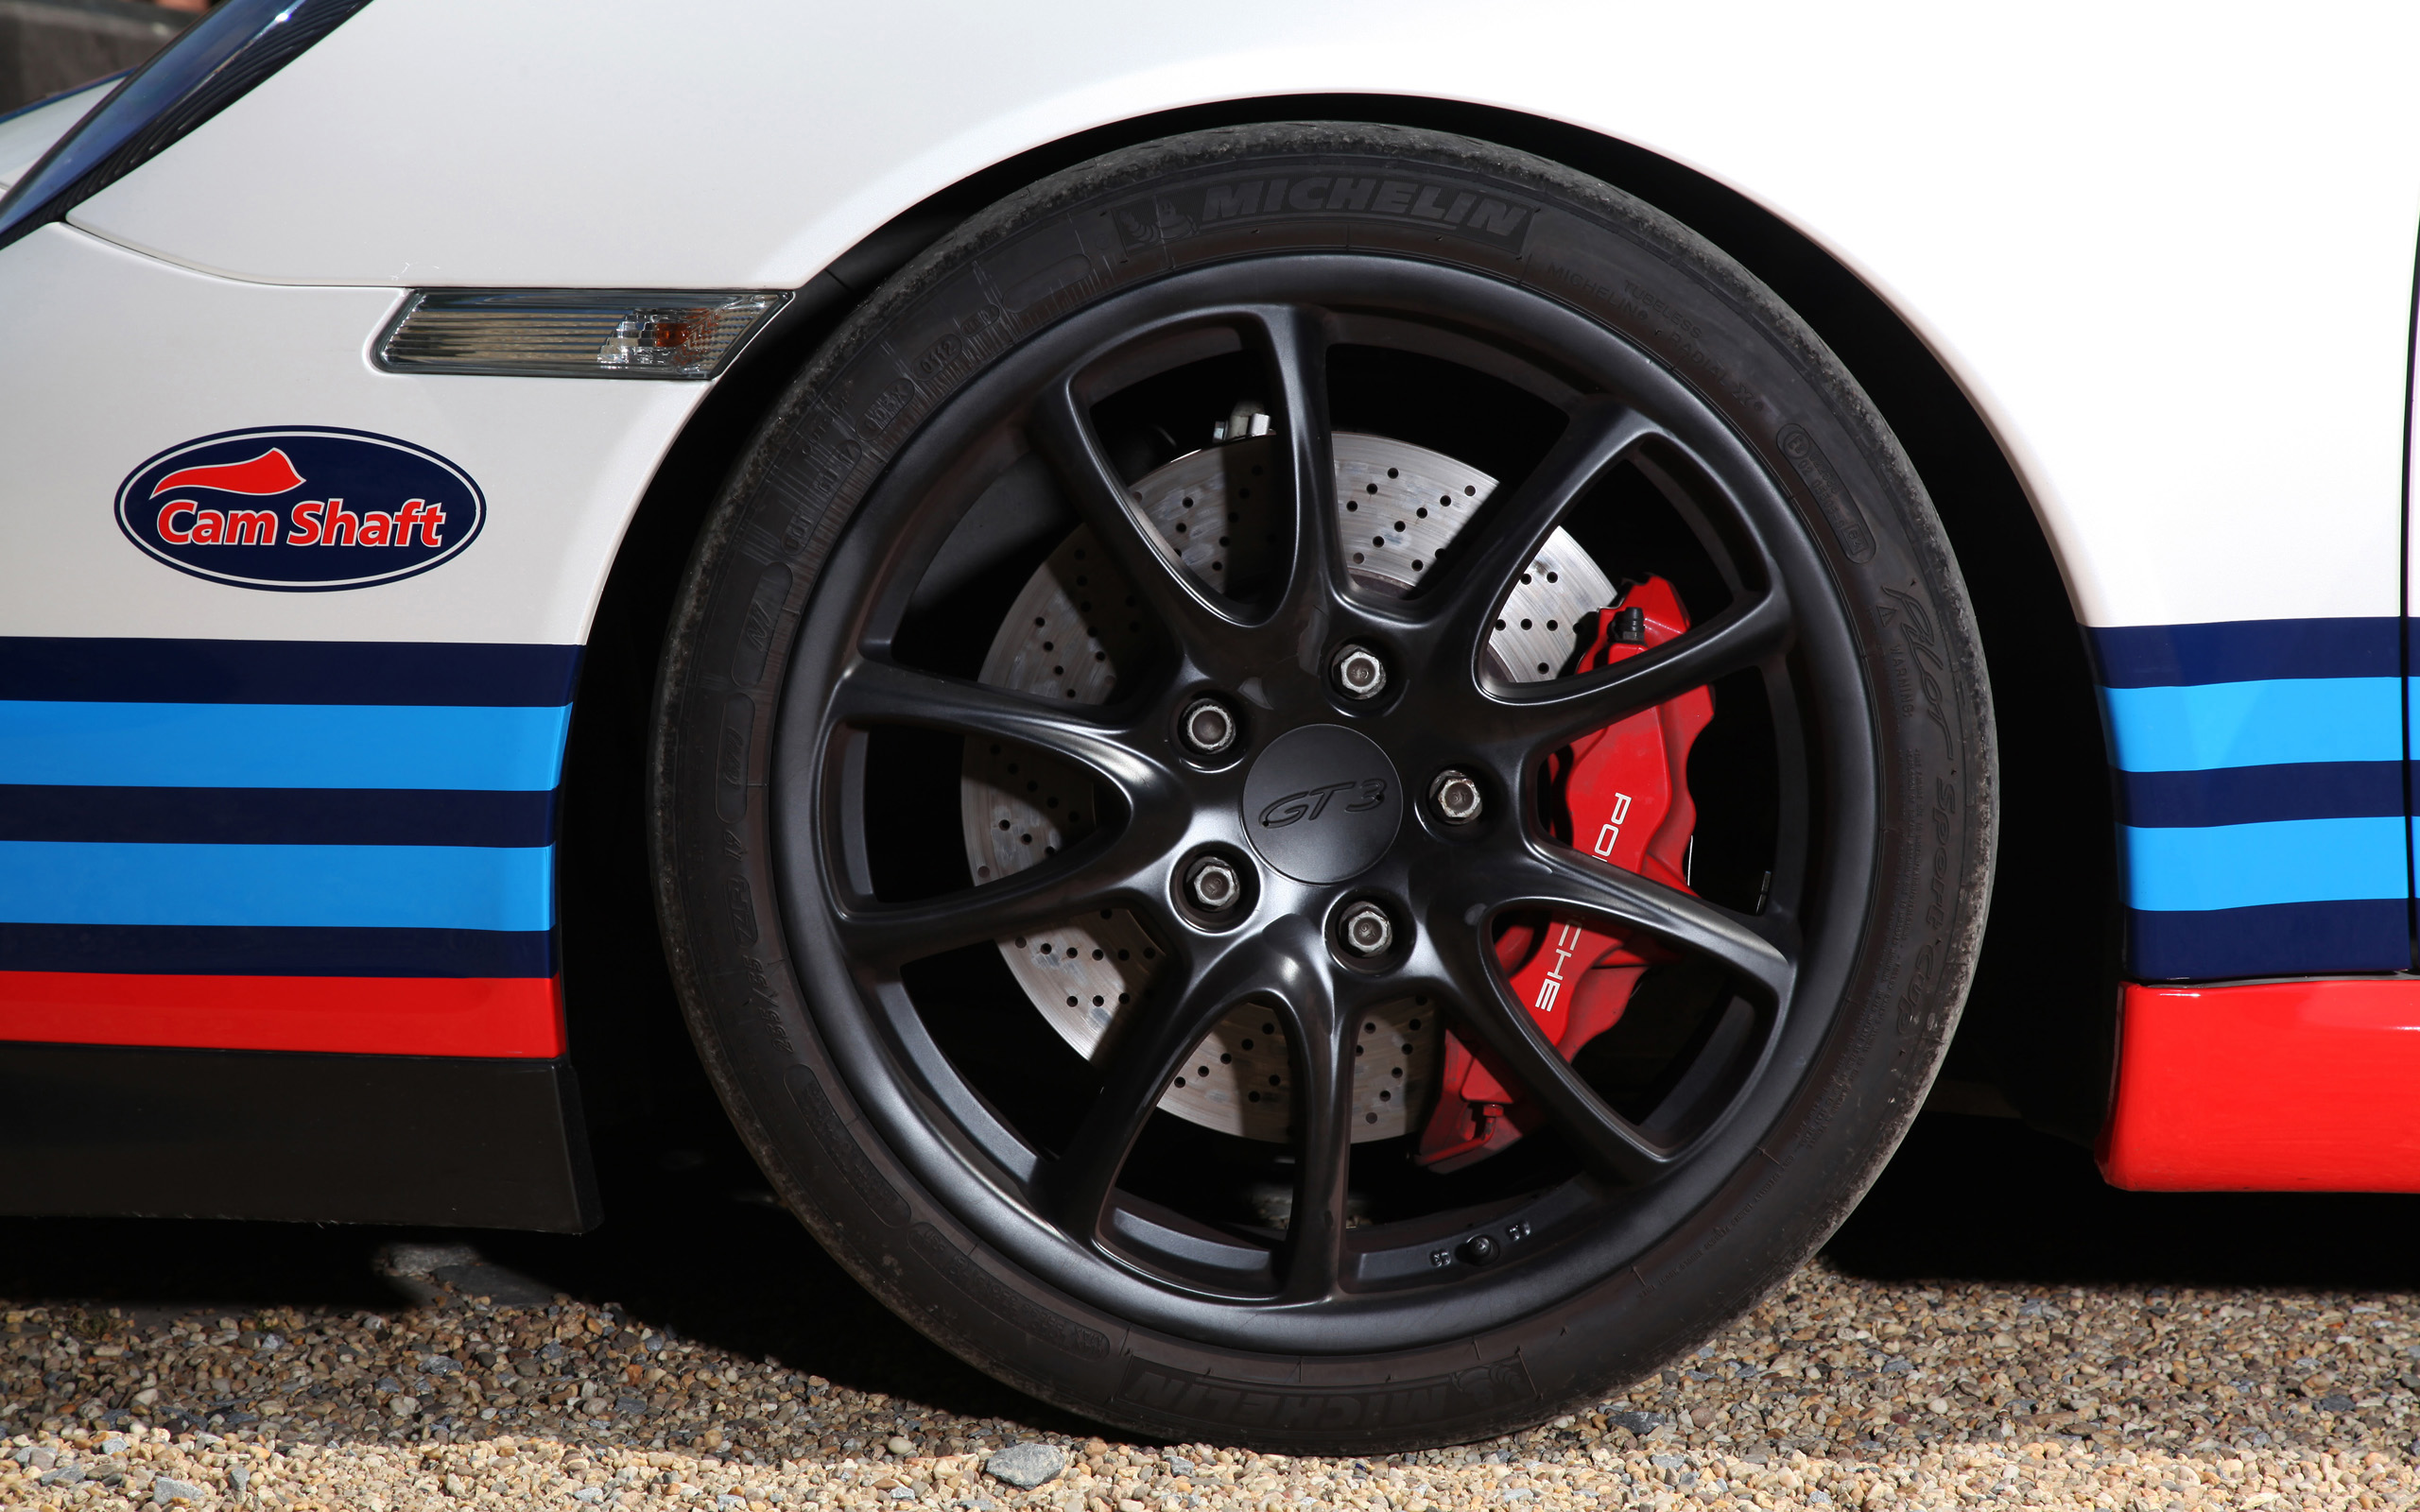 2013, Cam shaft, Porsche, 997, Gt3, Tuning, Race, Racing, Wheel Wallpaper